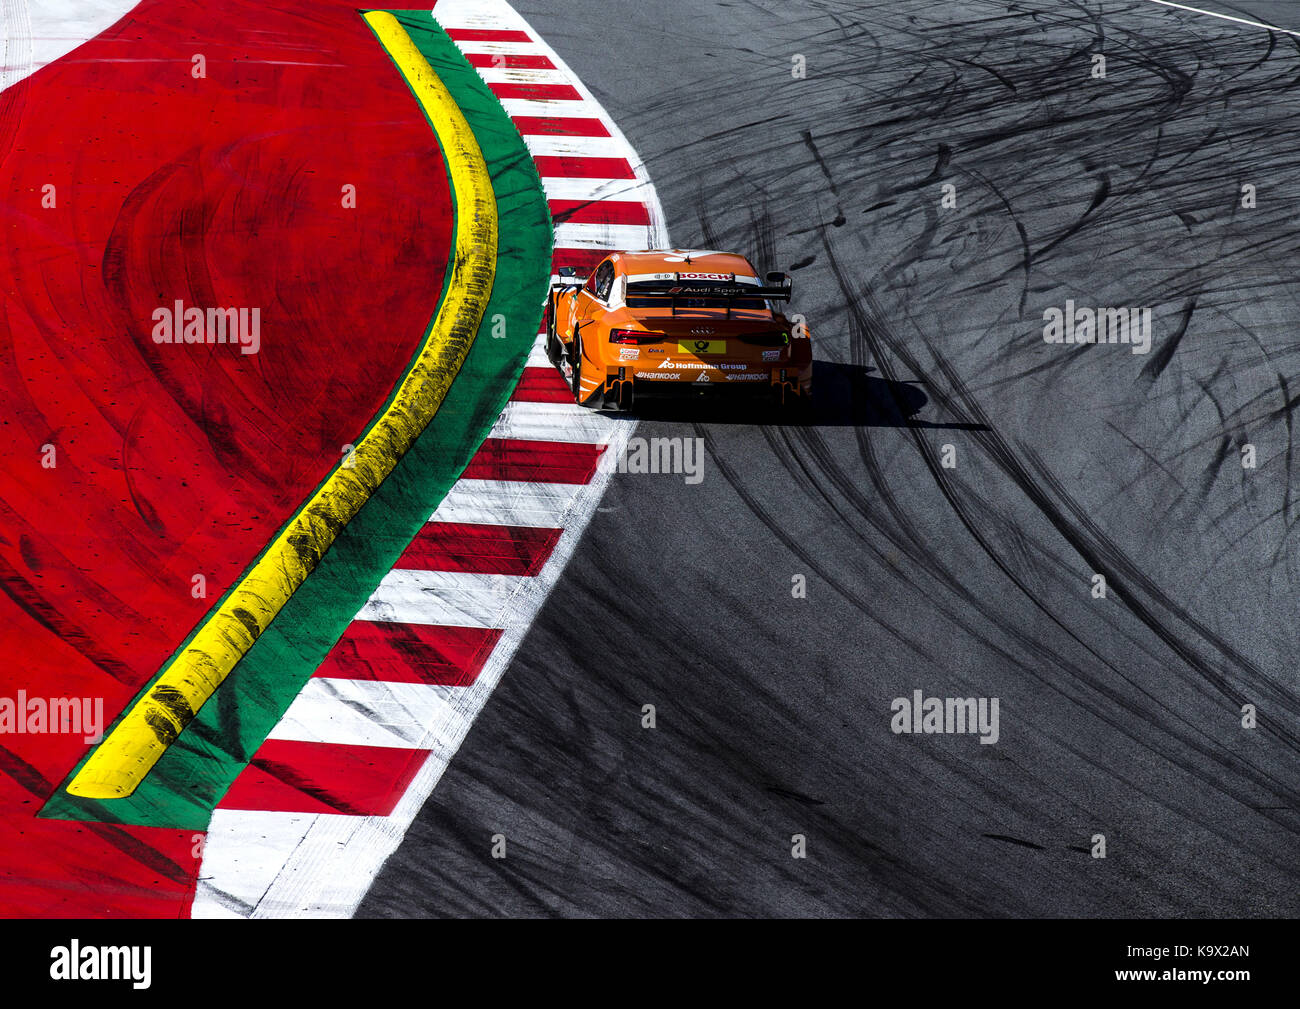 Motorsport: DTM 08 Spielberg 2017, Hoffmann Group Audi RS5 DTM #53 (Audi Sport Team Rosberg), Jamie Green | Verwendung weltweit Stockfoto